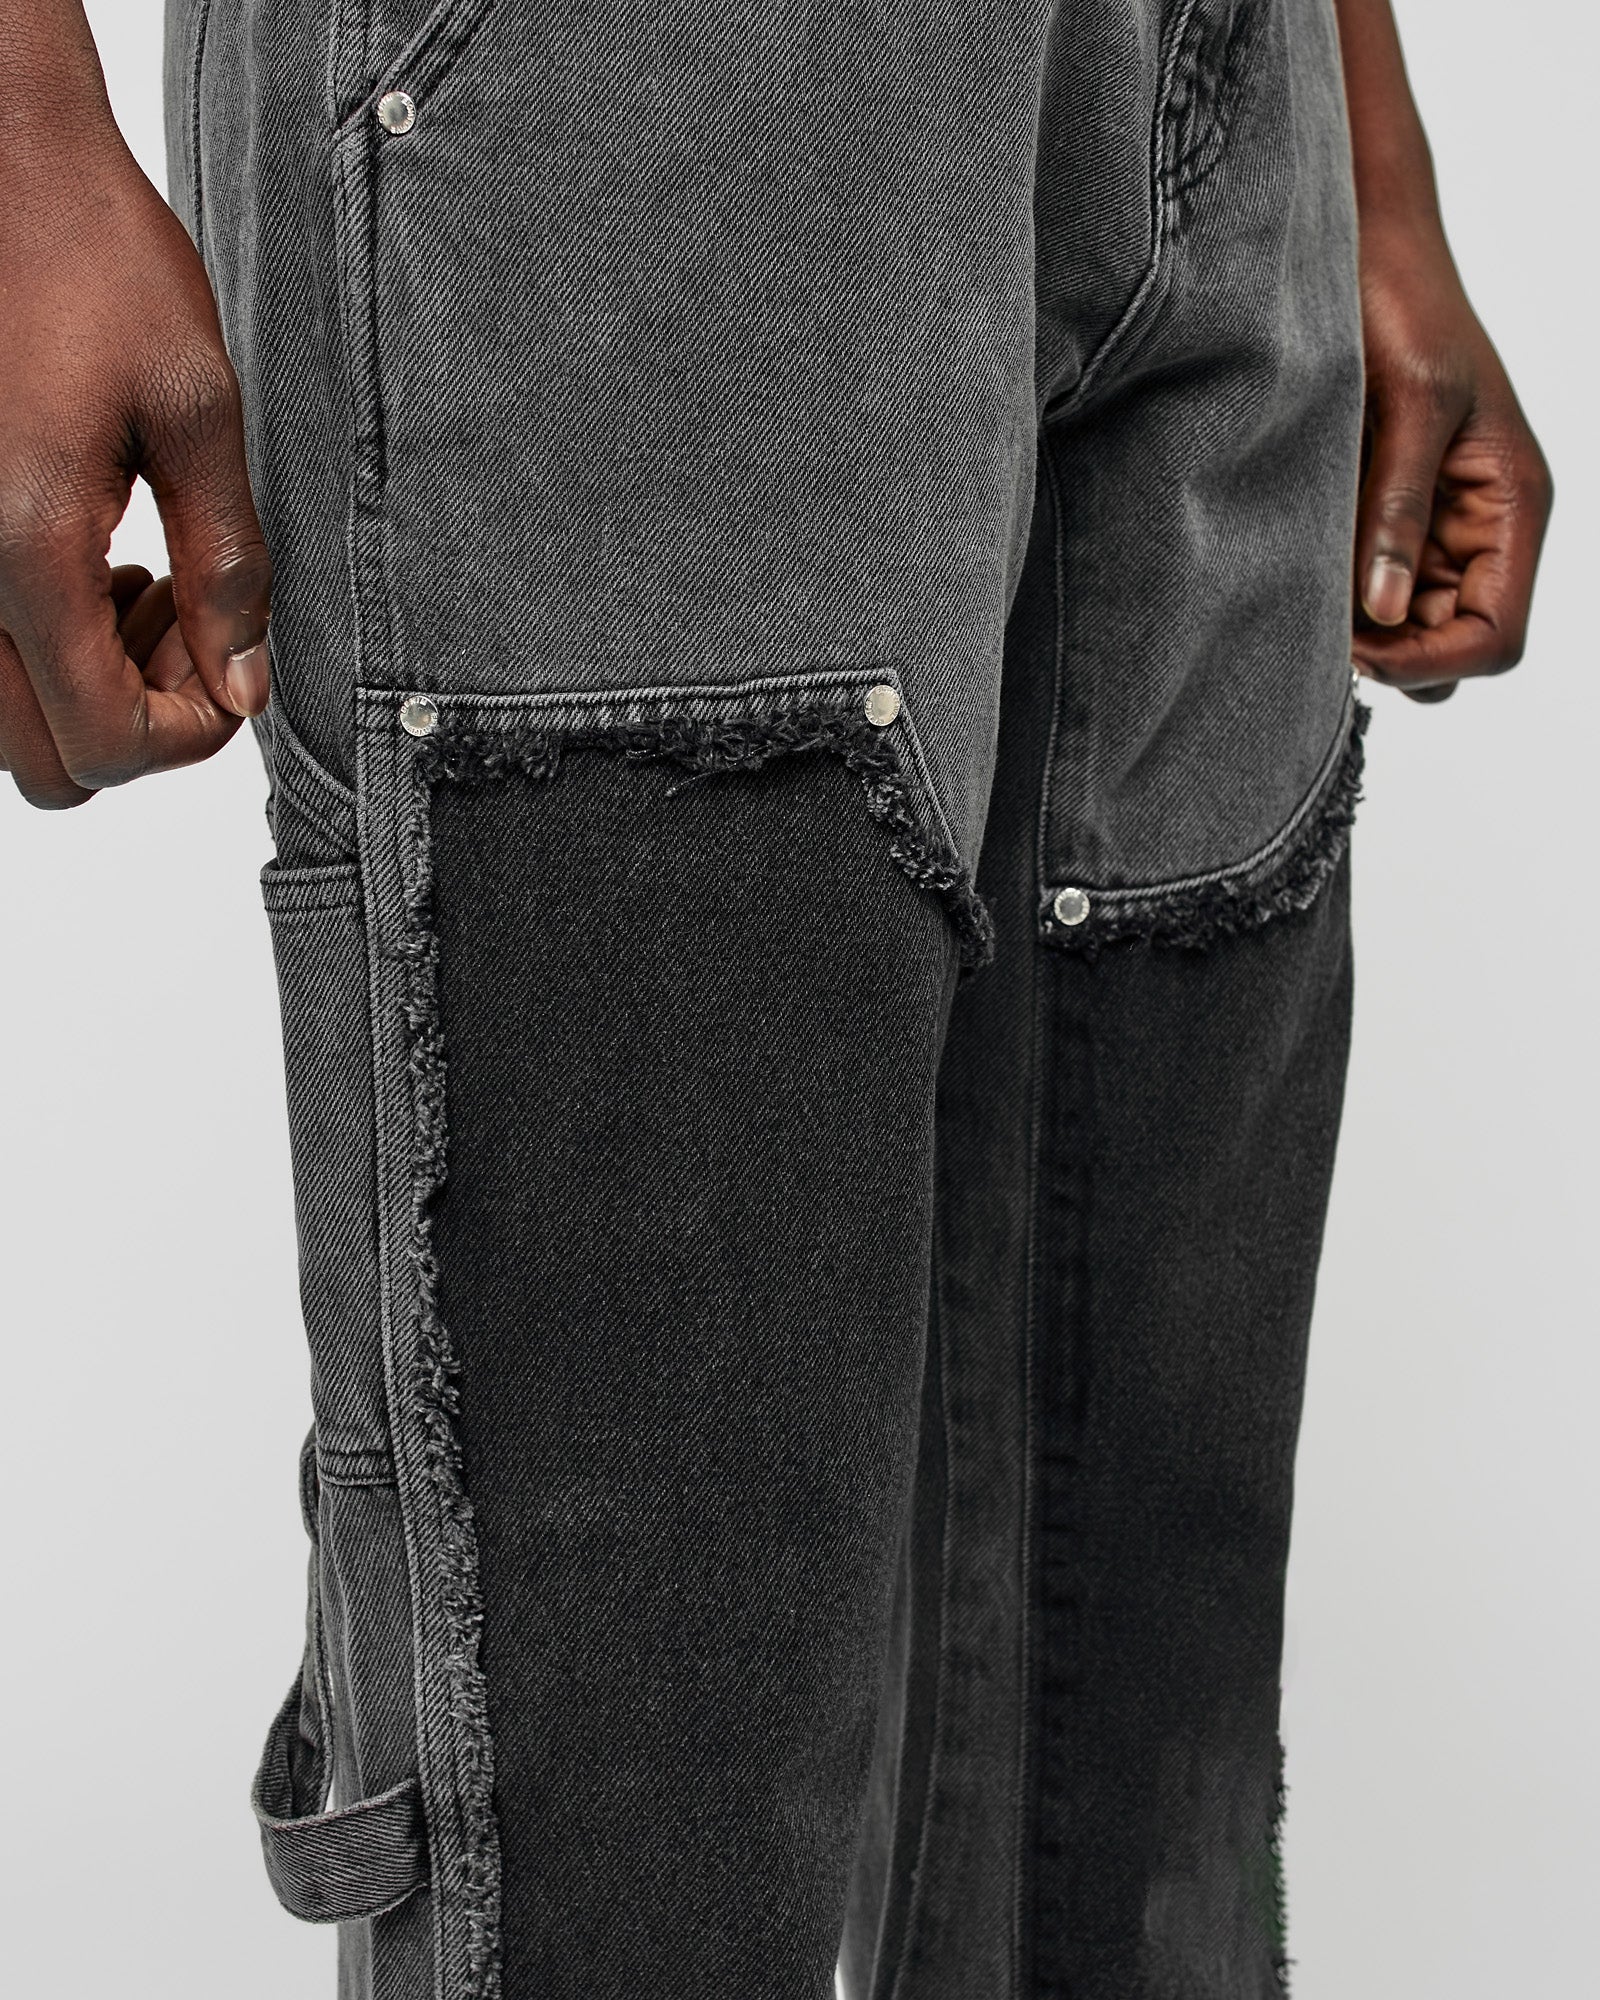 Flared Carpenter Jeans